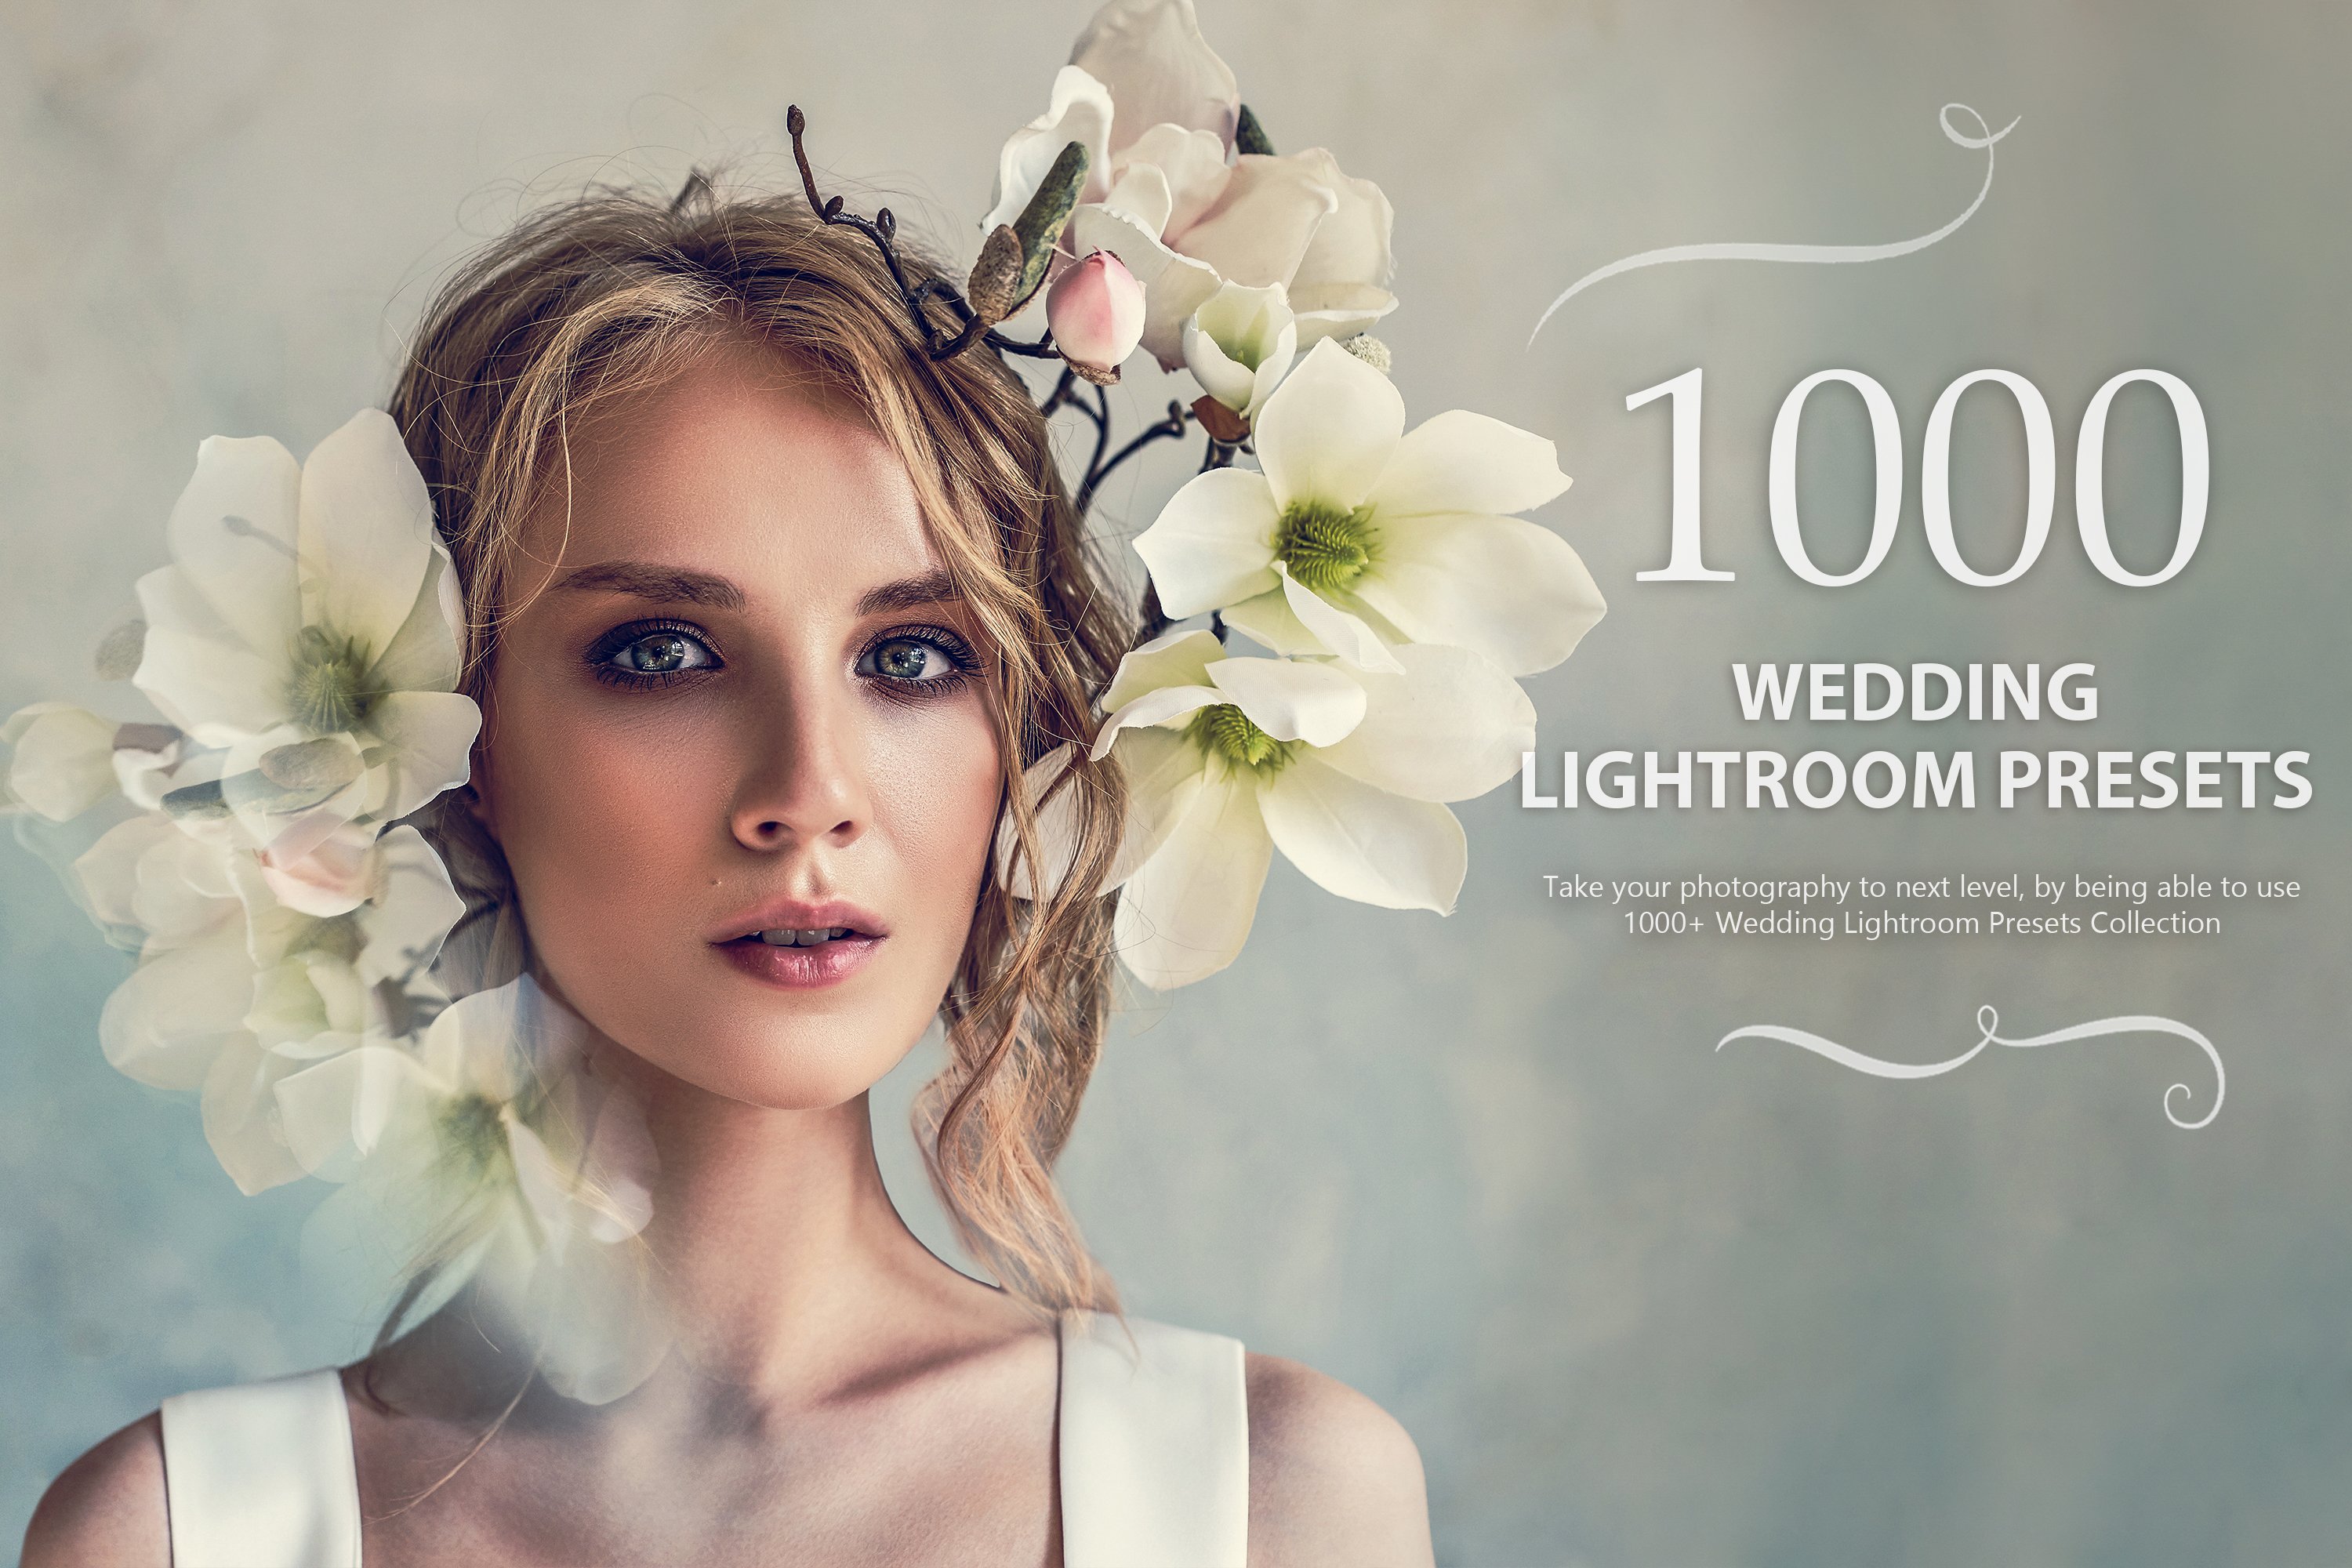 1000+ Wedding Lightroom Presetscover image.